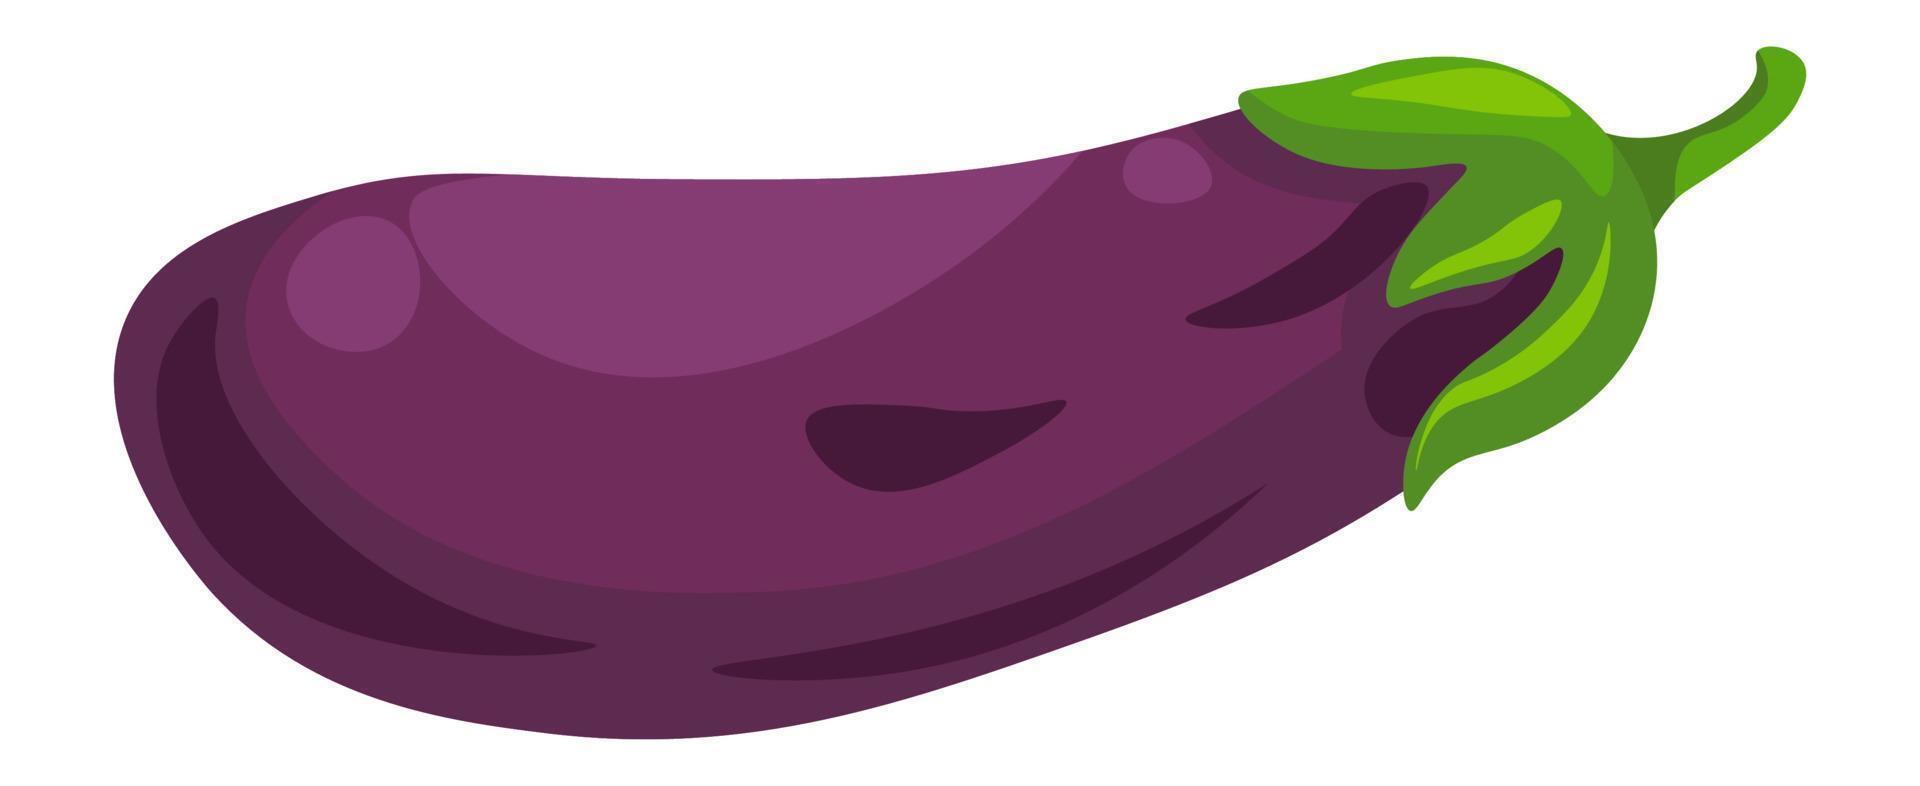 aubergine of aubergine groente, biologisch groenten vector